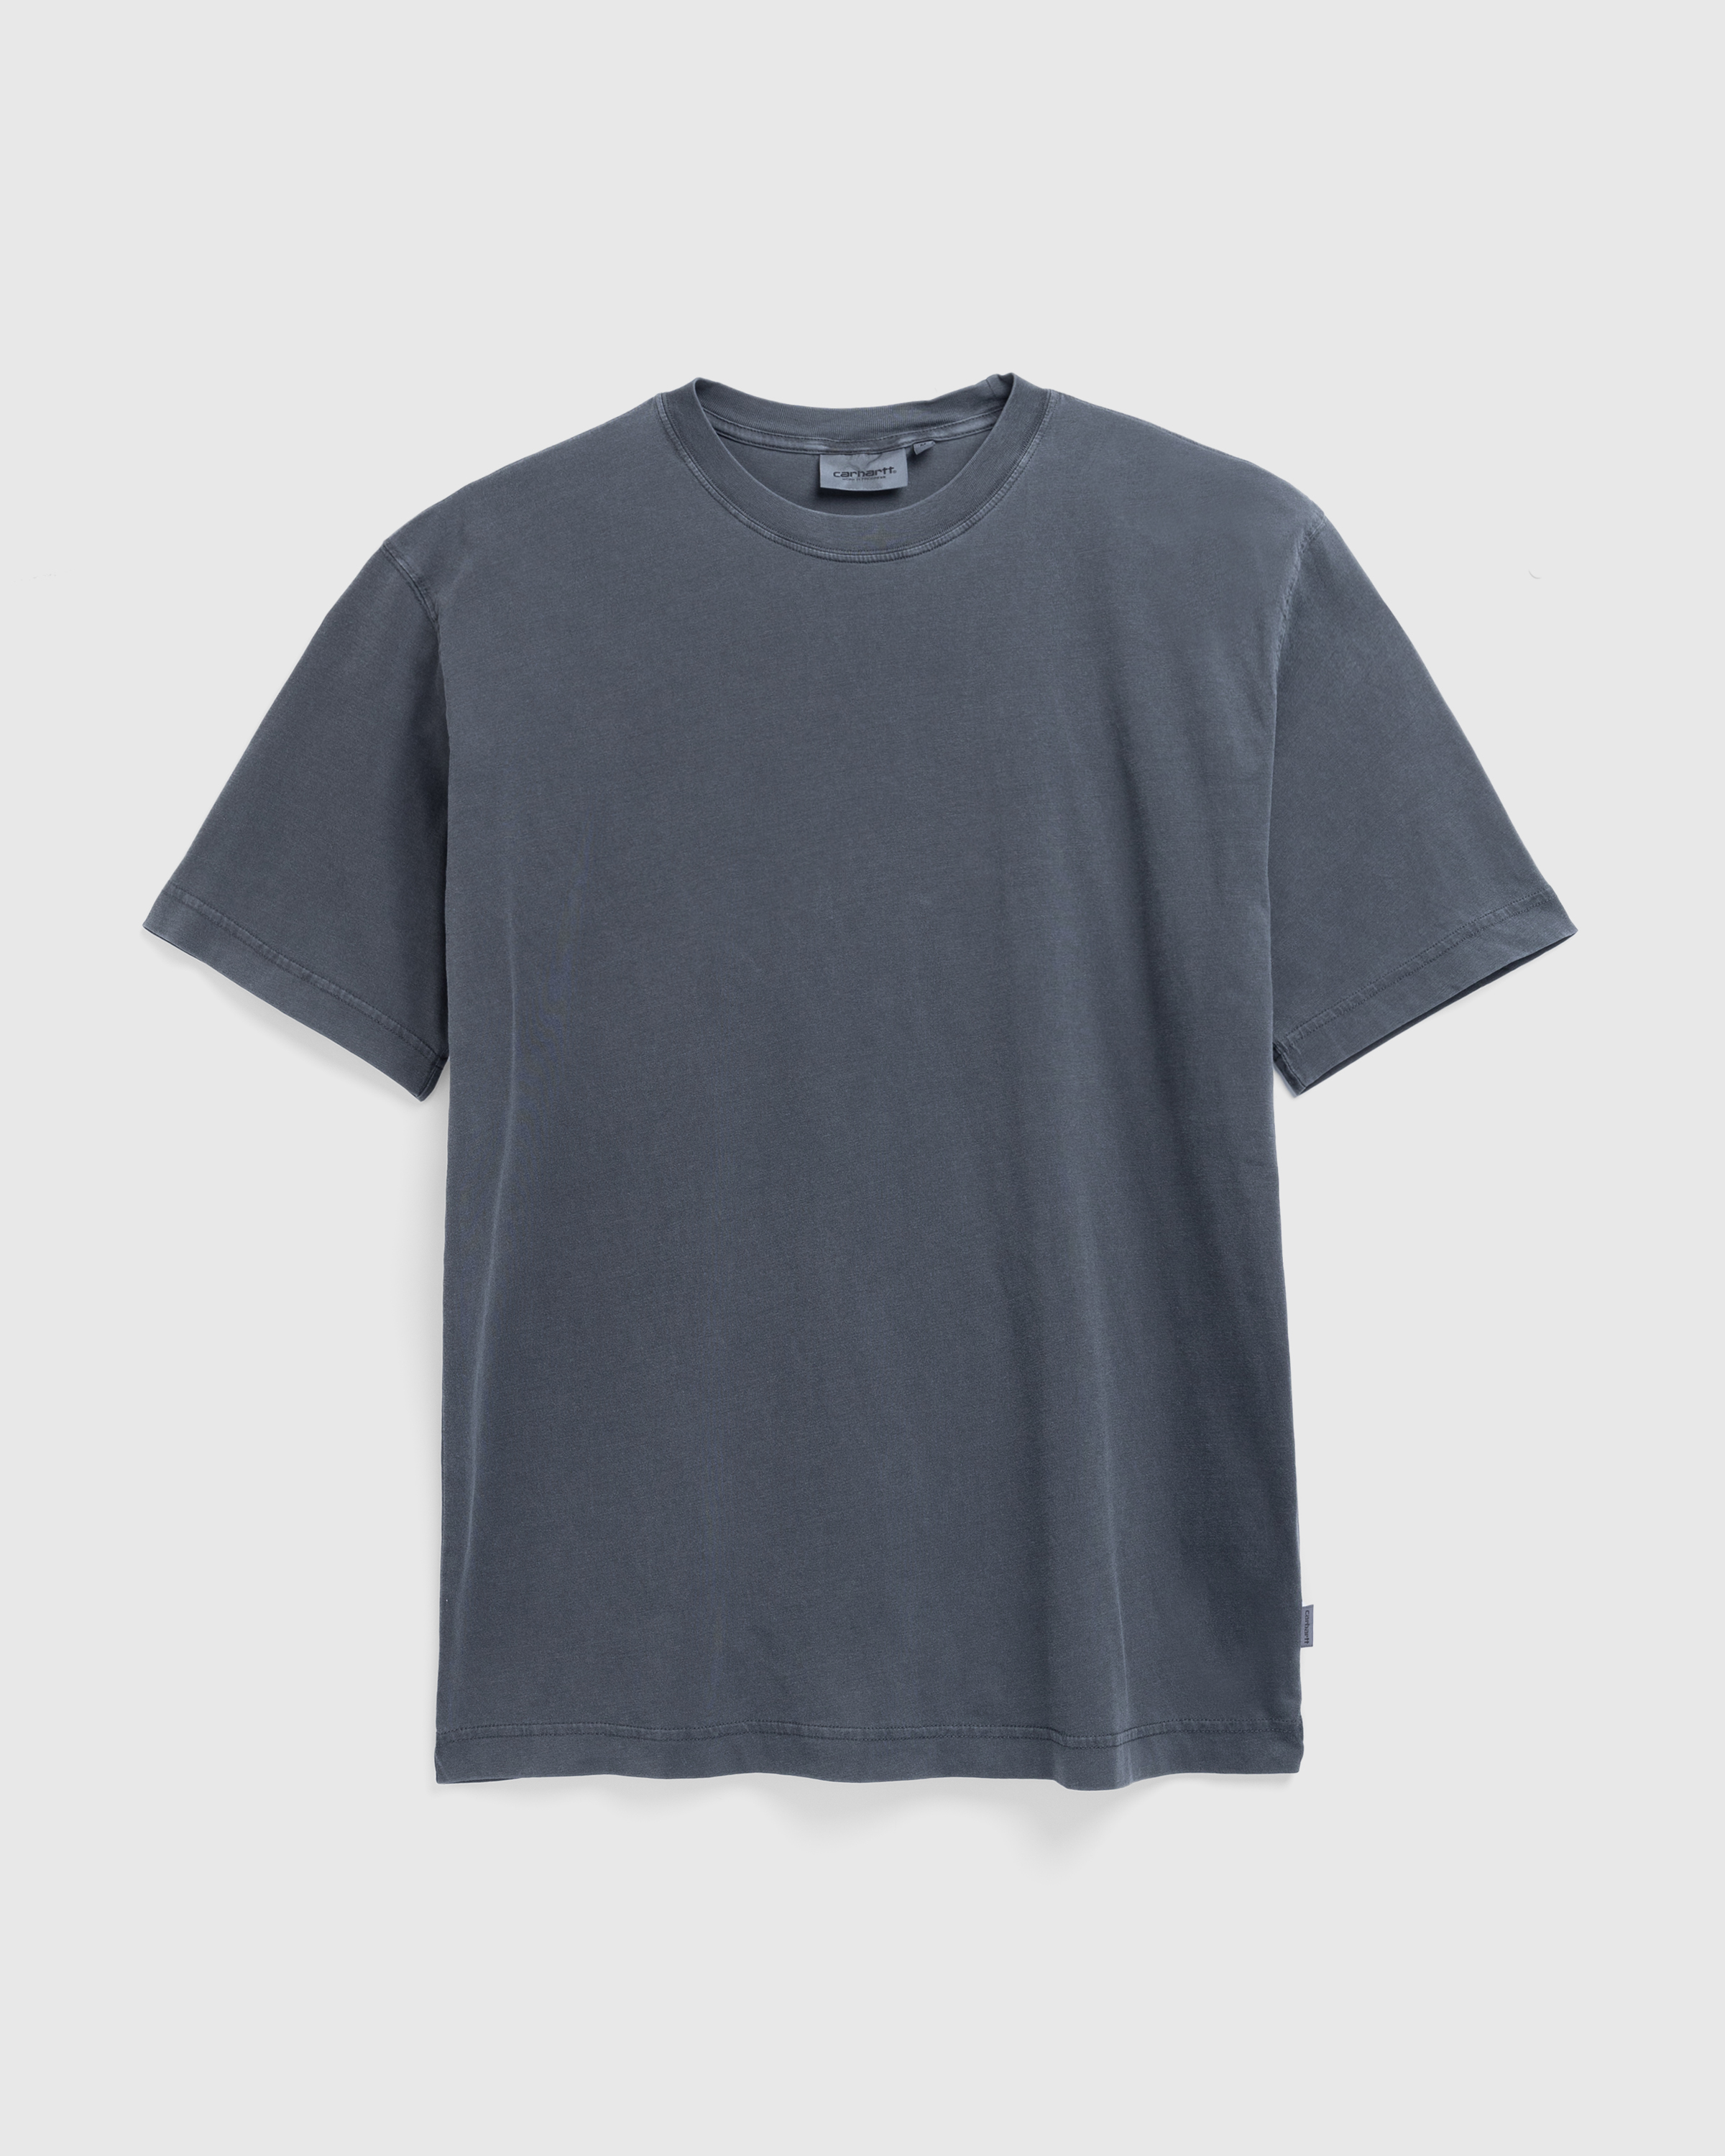 Carhartt WIP – Dune T-Shirt Charcoal/Garment Dyed - Tops - Grey - Image 1